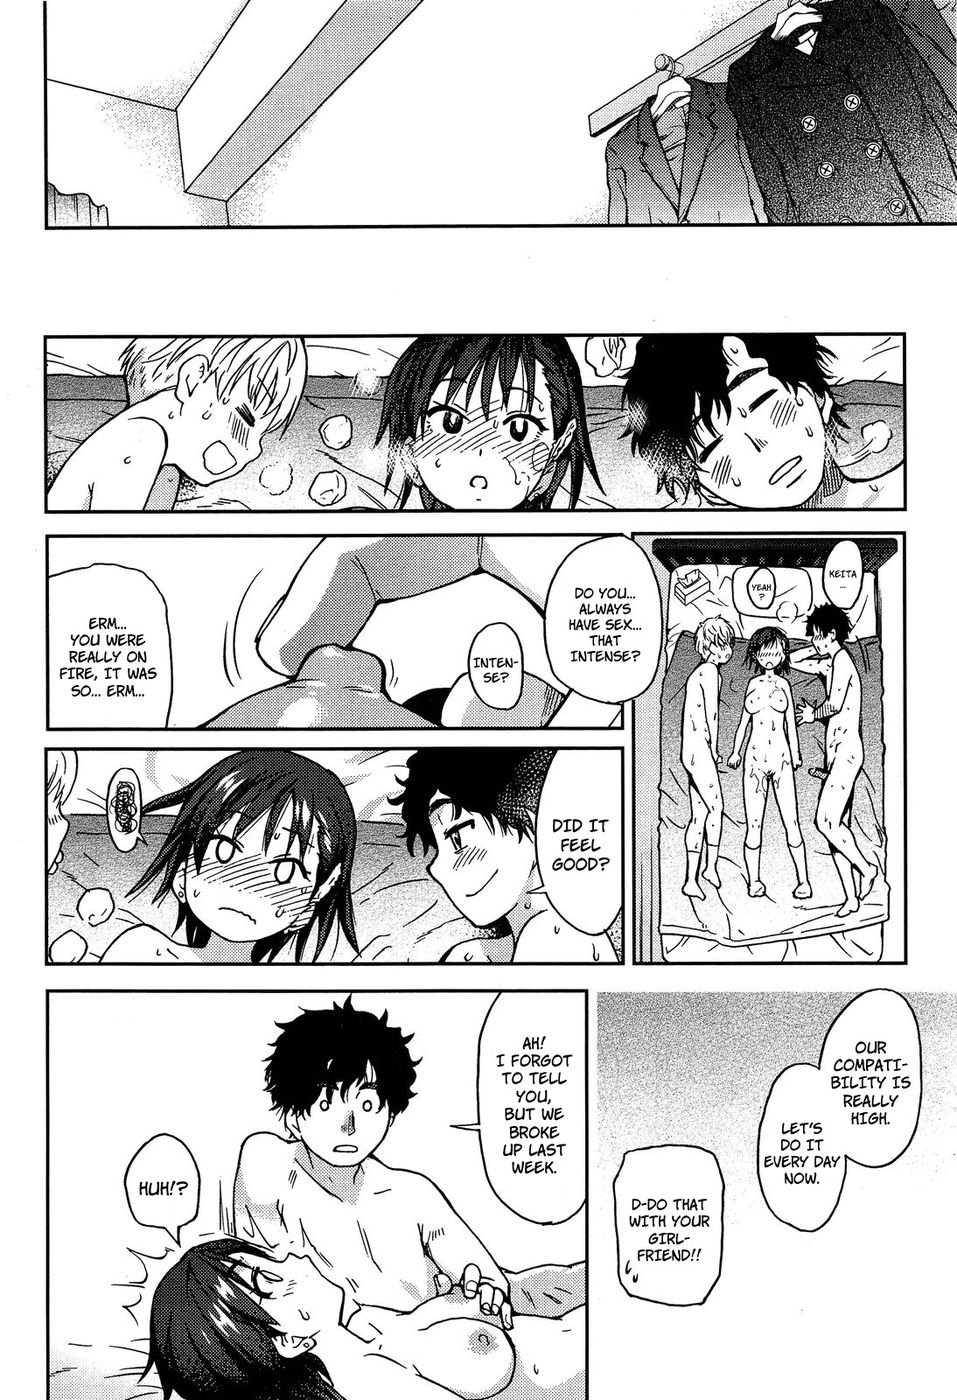 Boyfriend And Girlfriend Sex Comics - Girlfriend Boyfriend Girlfriend-Read-Hentai Manga Hentai Comic - Page: 32 -  Online porn video at mobile